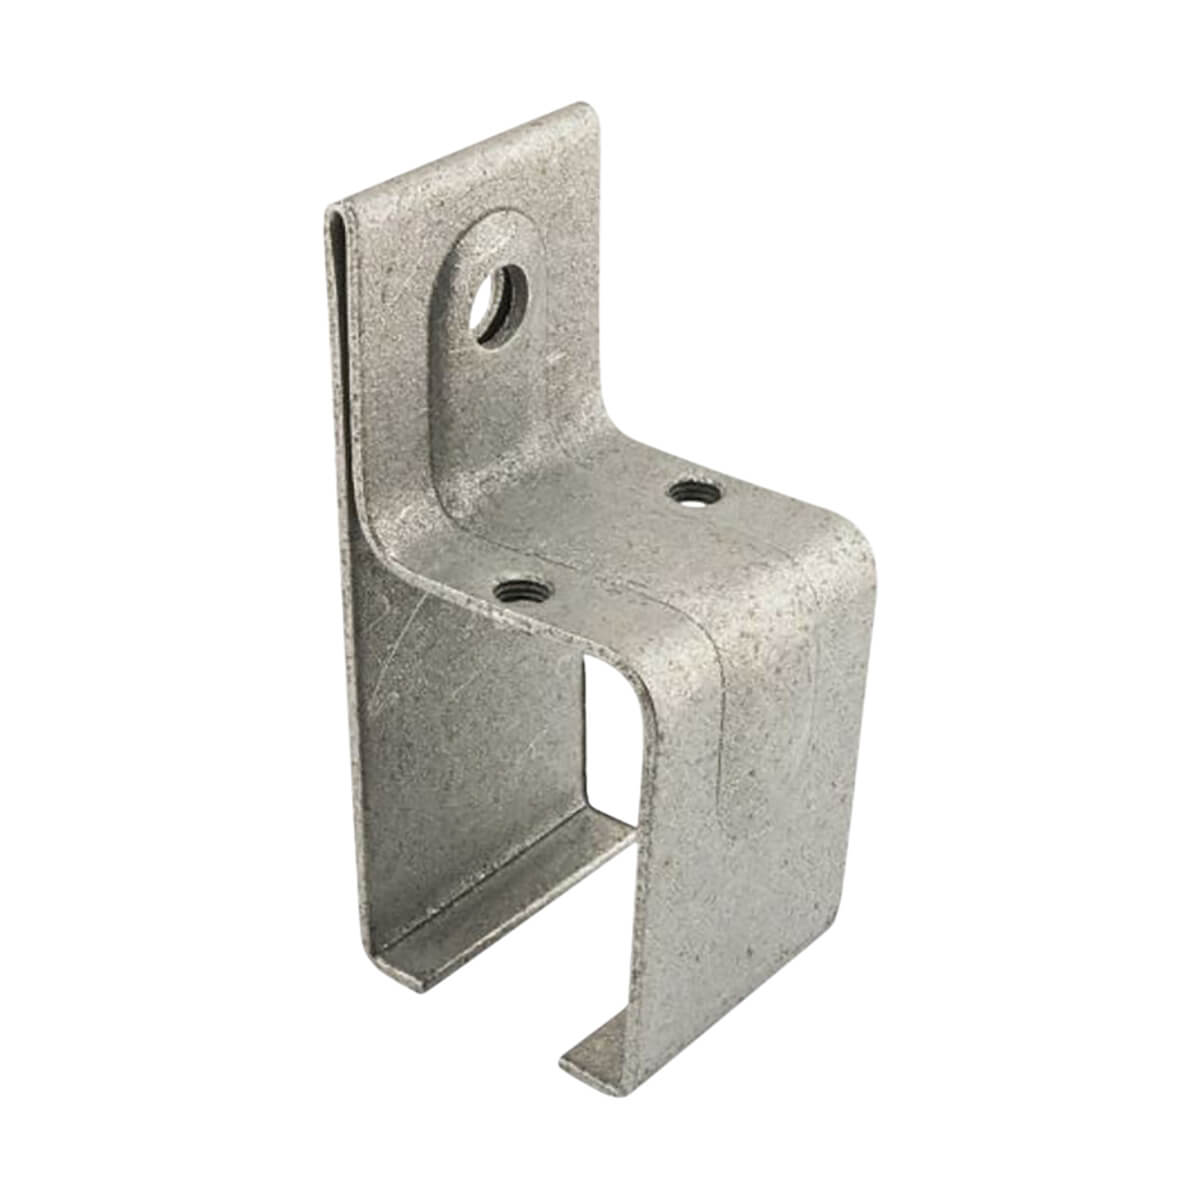 Single Galvanized Steel Box Rail Splice Bracket with Clamp Screws for Wall Mount